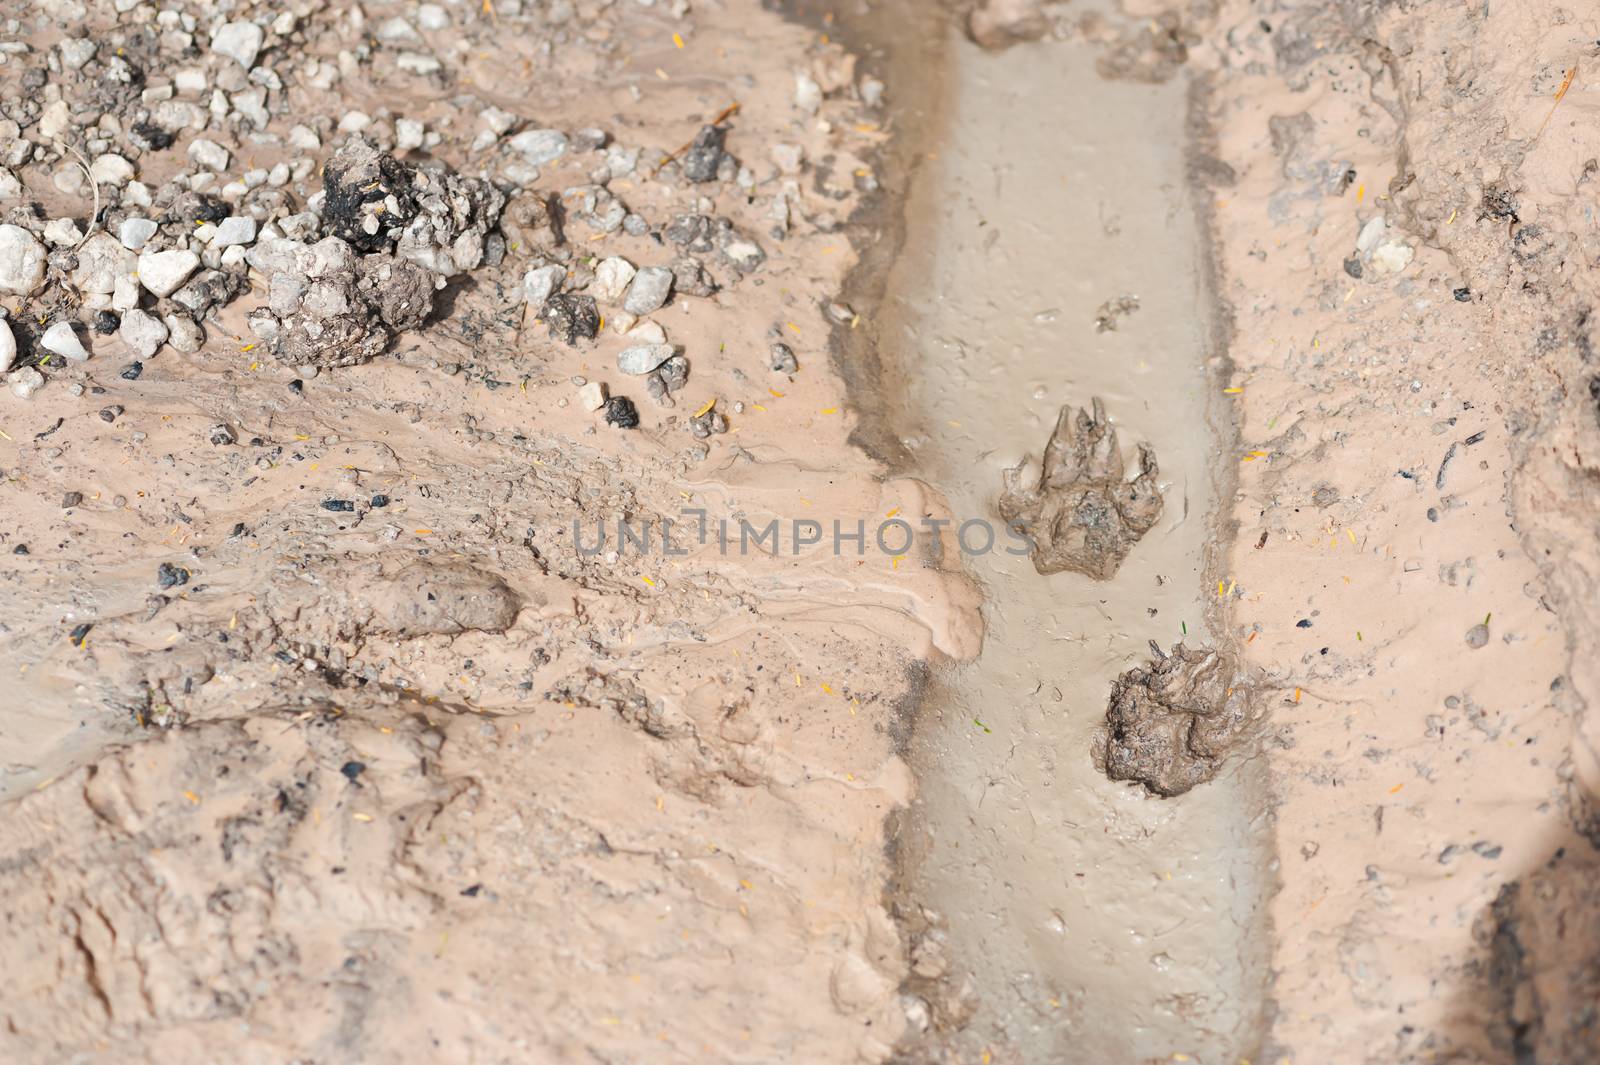 Footprints of animal by panumazz@gmail.com